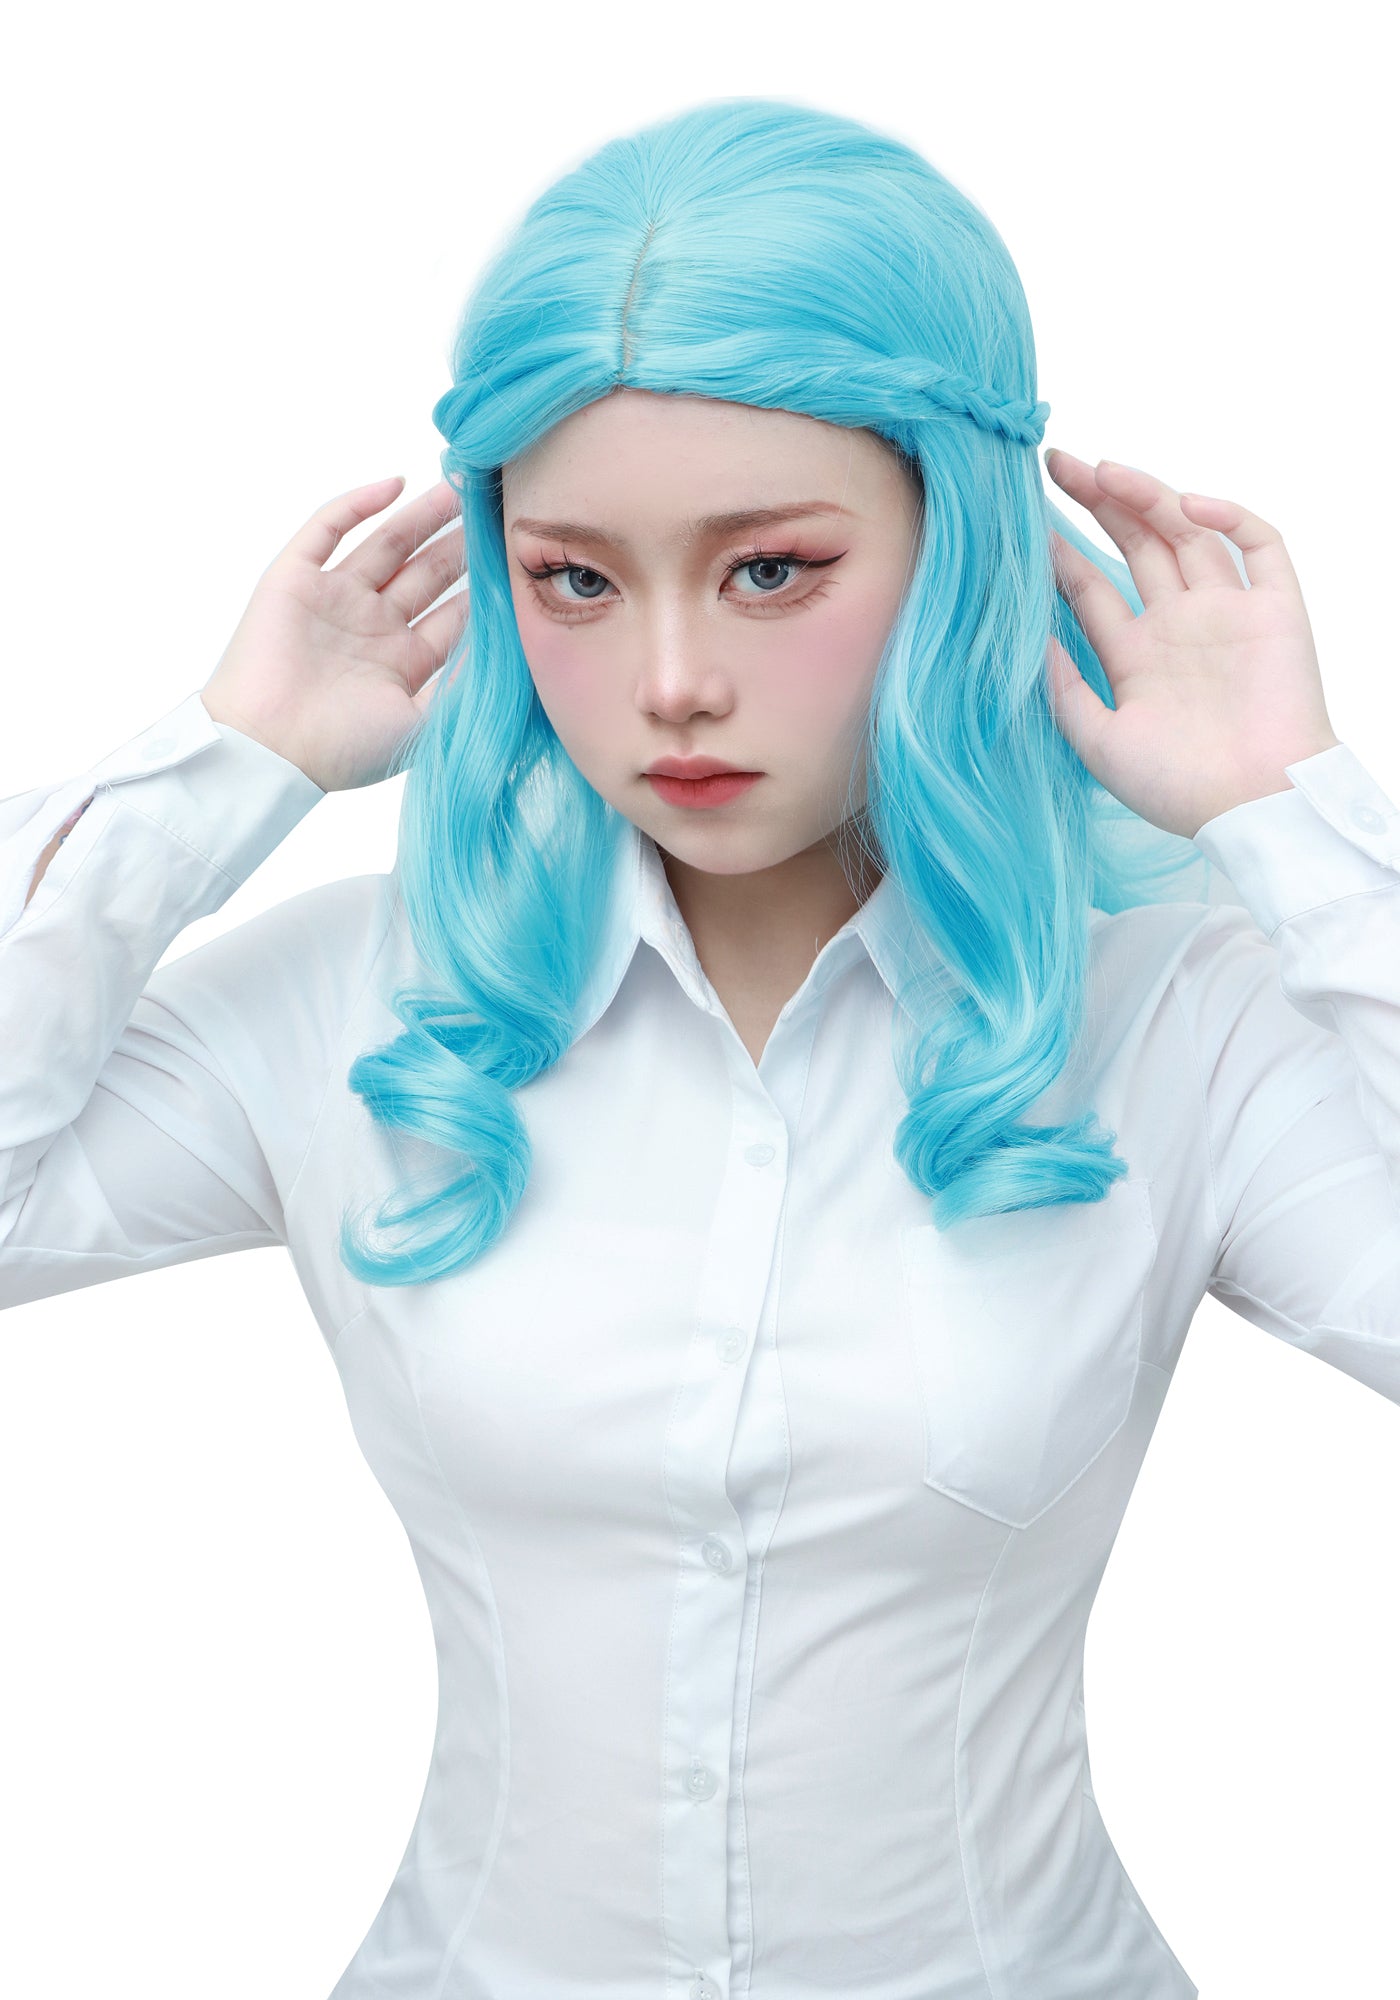 DAZCOS Blue Long Wavy Wig Braid Curly Wave Wig for Adults Kid Halloween Cosplay Costume